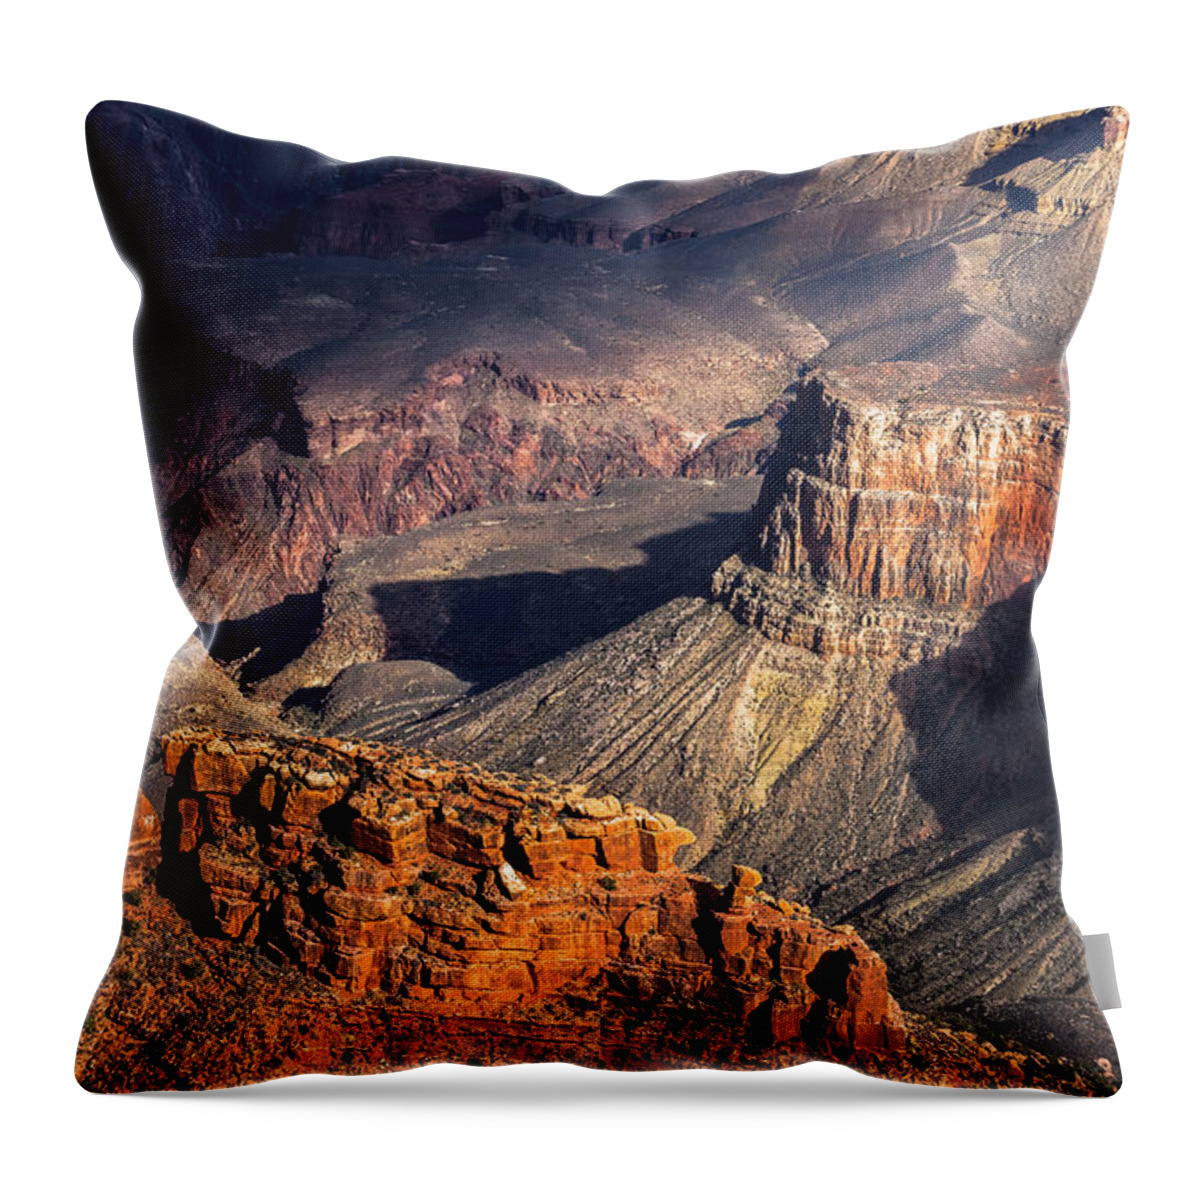 Arizona Throw Pillow featuring the photograph Battleship Rock by Ed Gleichman